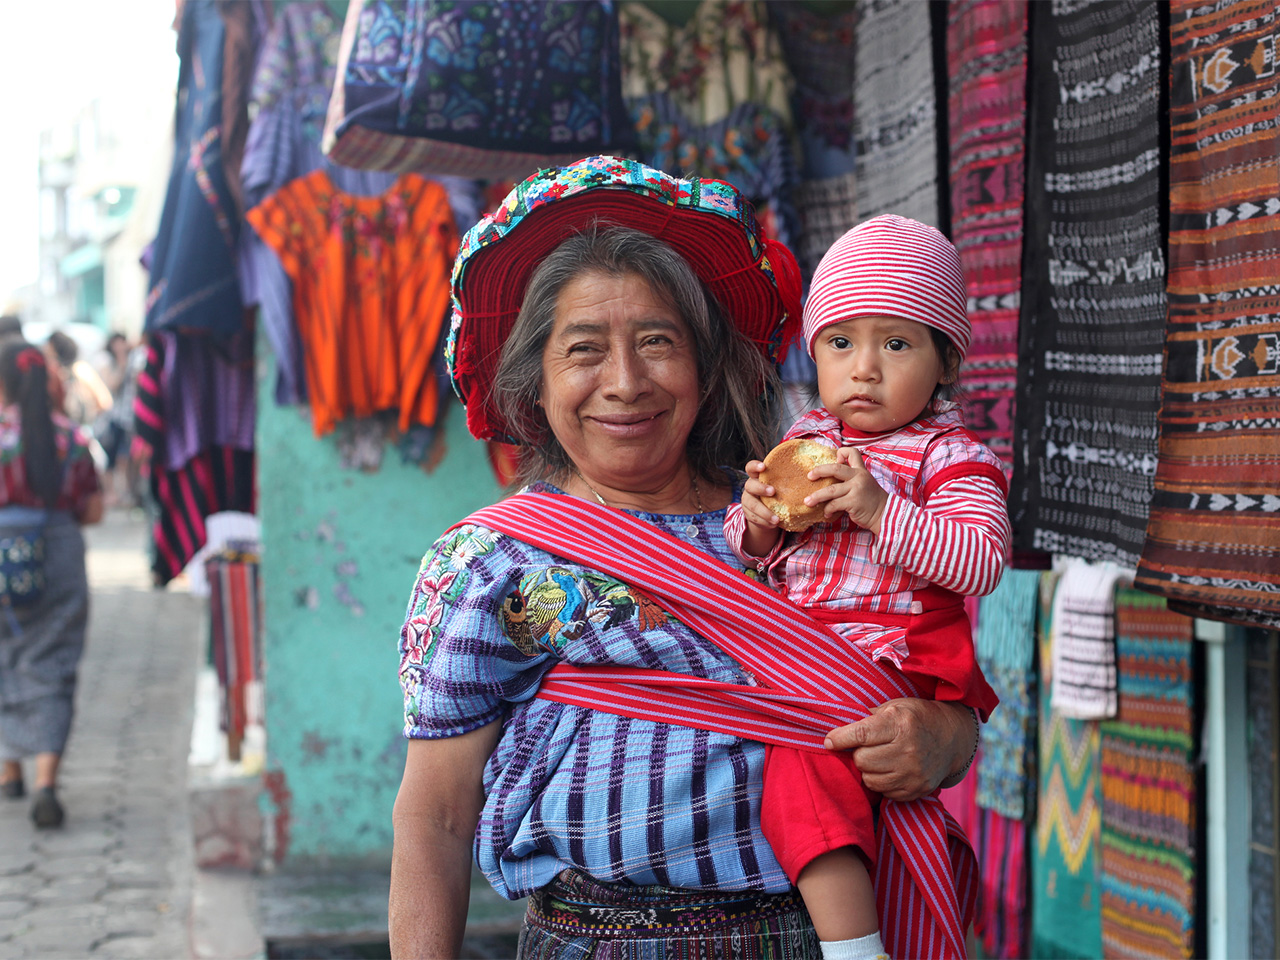 A Maya woman and child in Guatemala smile at the camera.